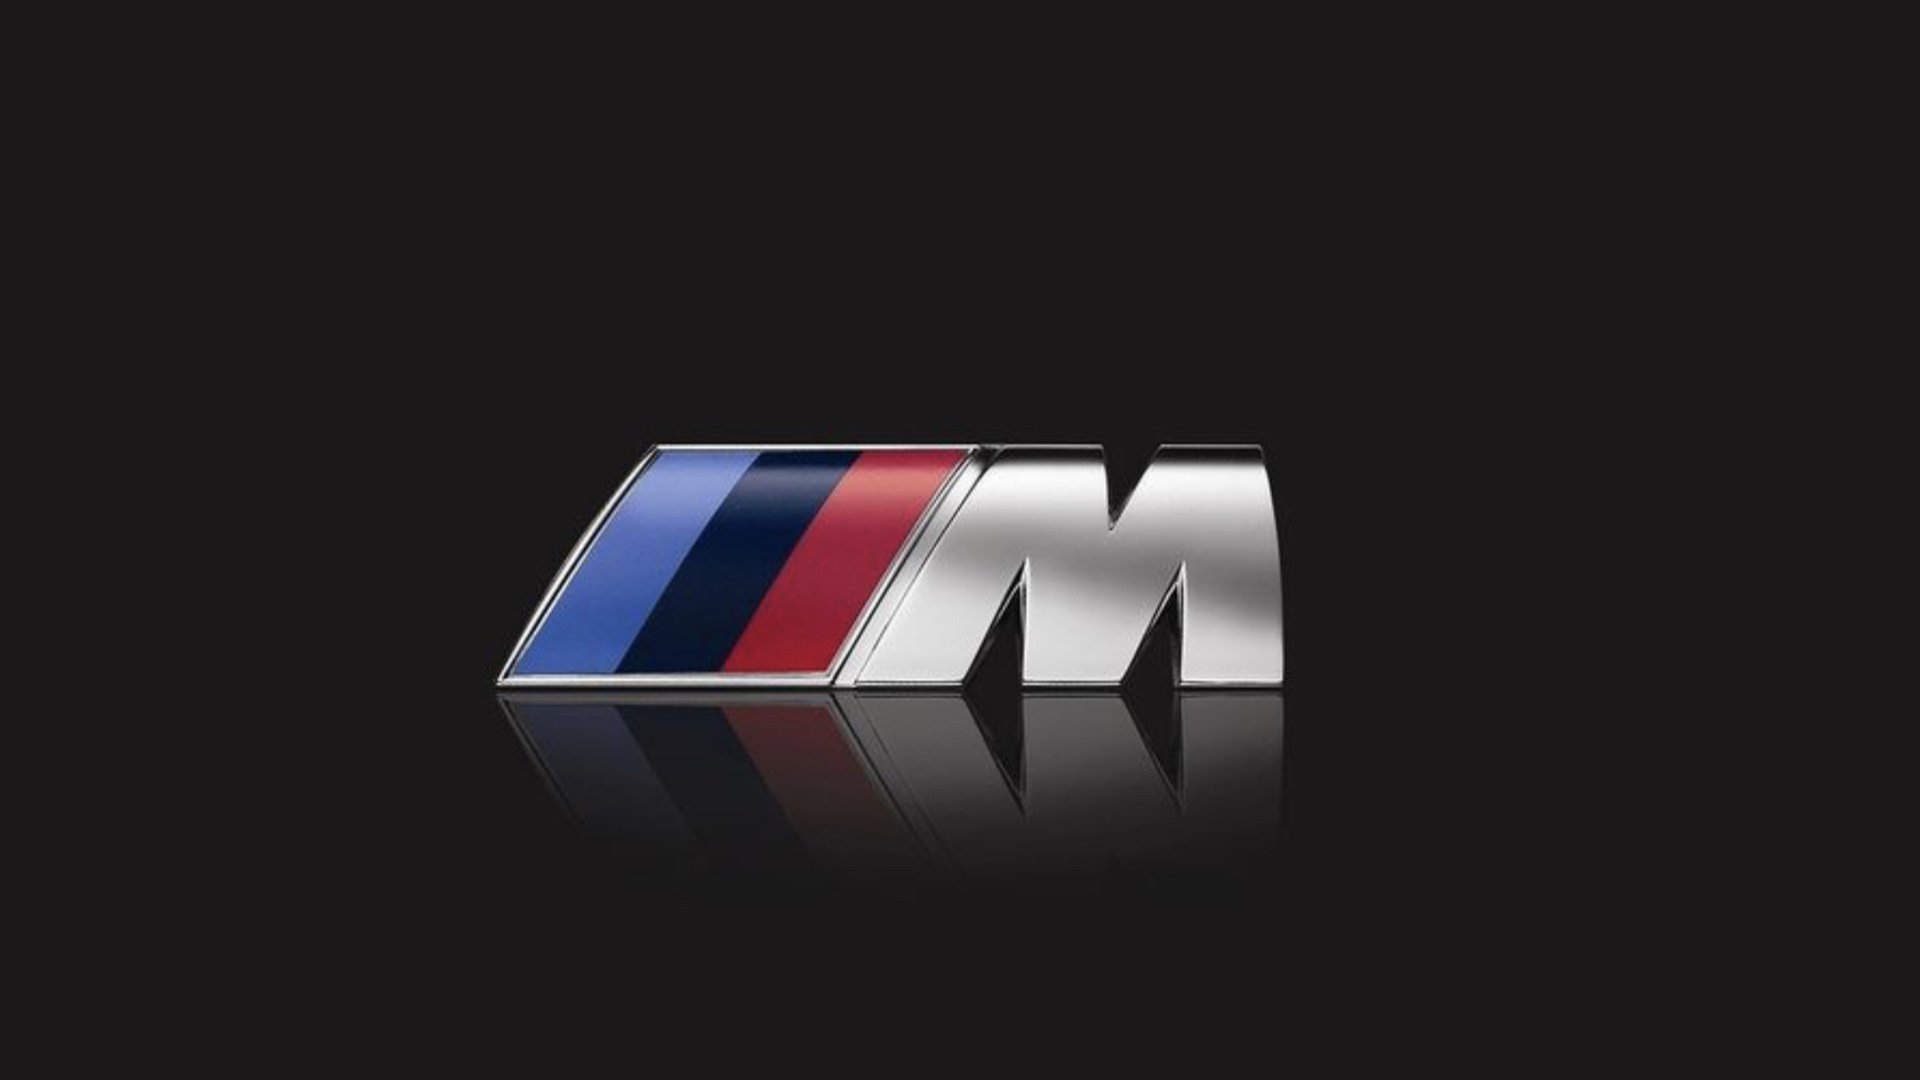 Bmw m power. БМВ MPOWER. BMW M Power m5 логотип. БМВ MPOWER лого. BMW M флаг.